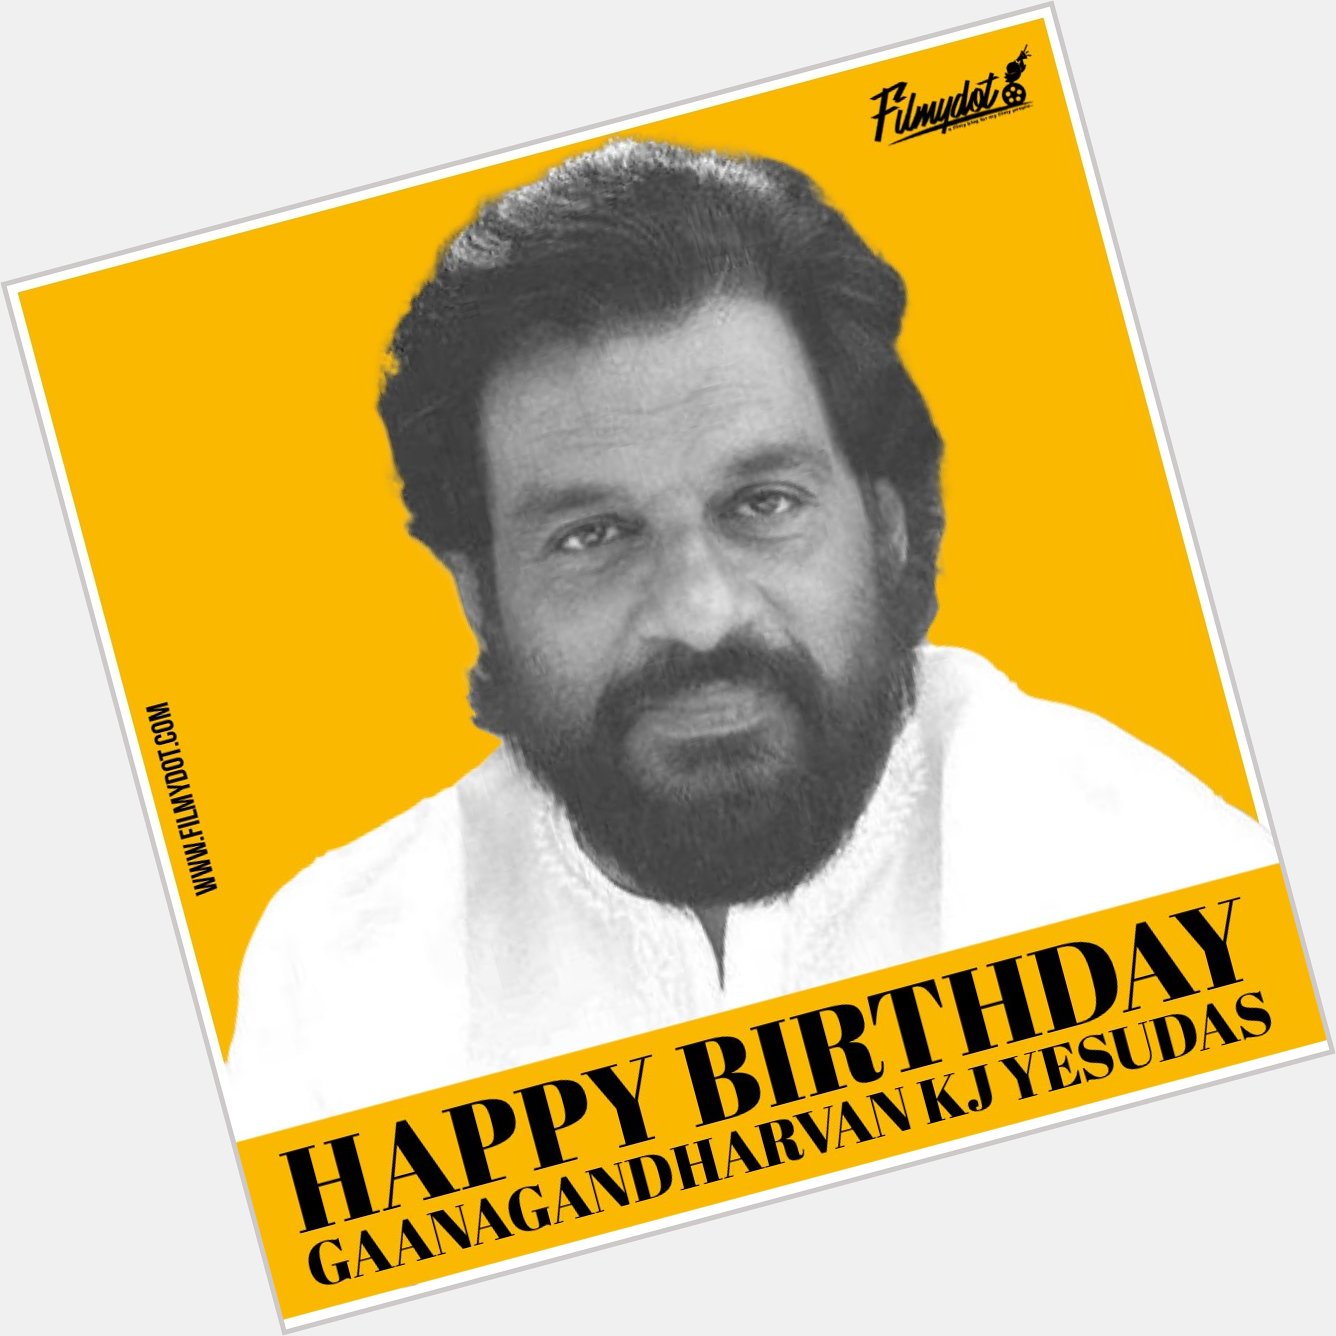 Happy birthday to the great legendary Gaanagandharvan K.J.YESUDAS sir   